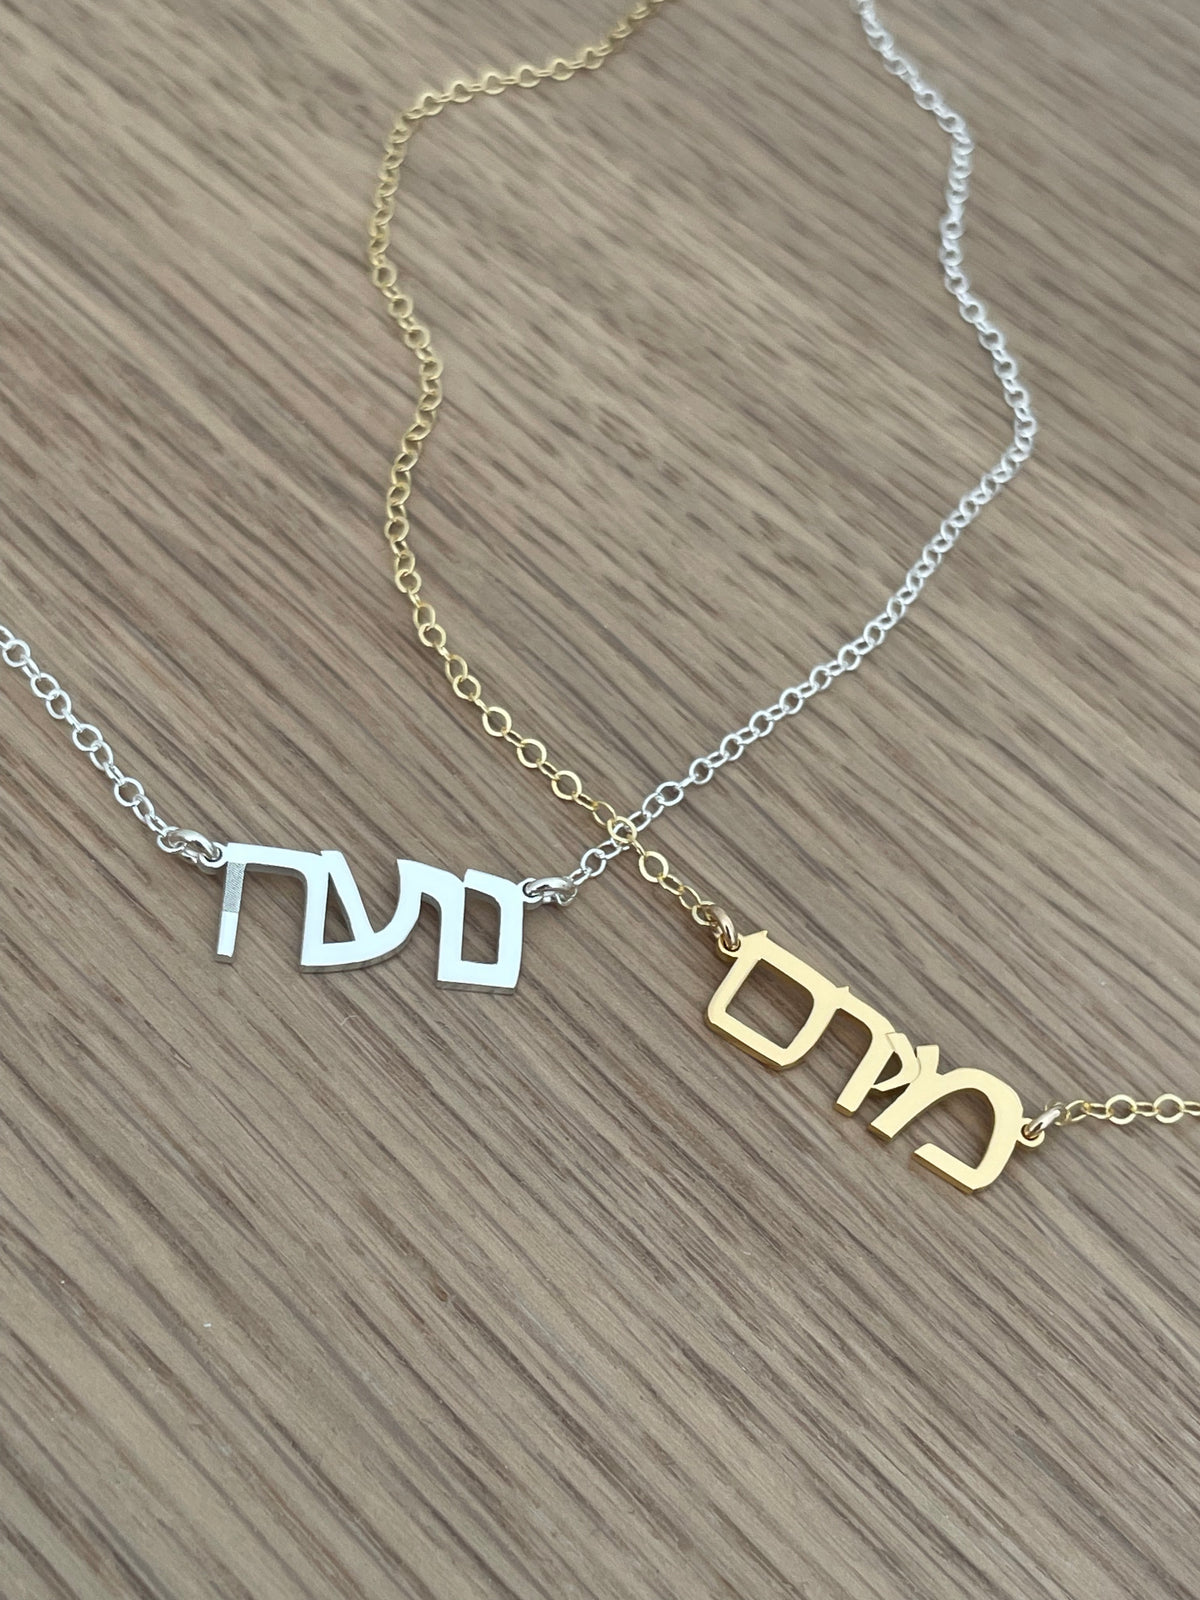 Galia Hebrew Nameplate Necklace